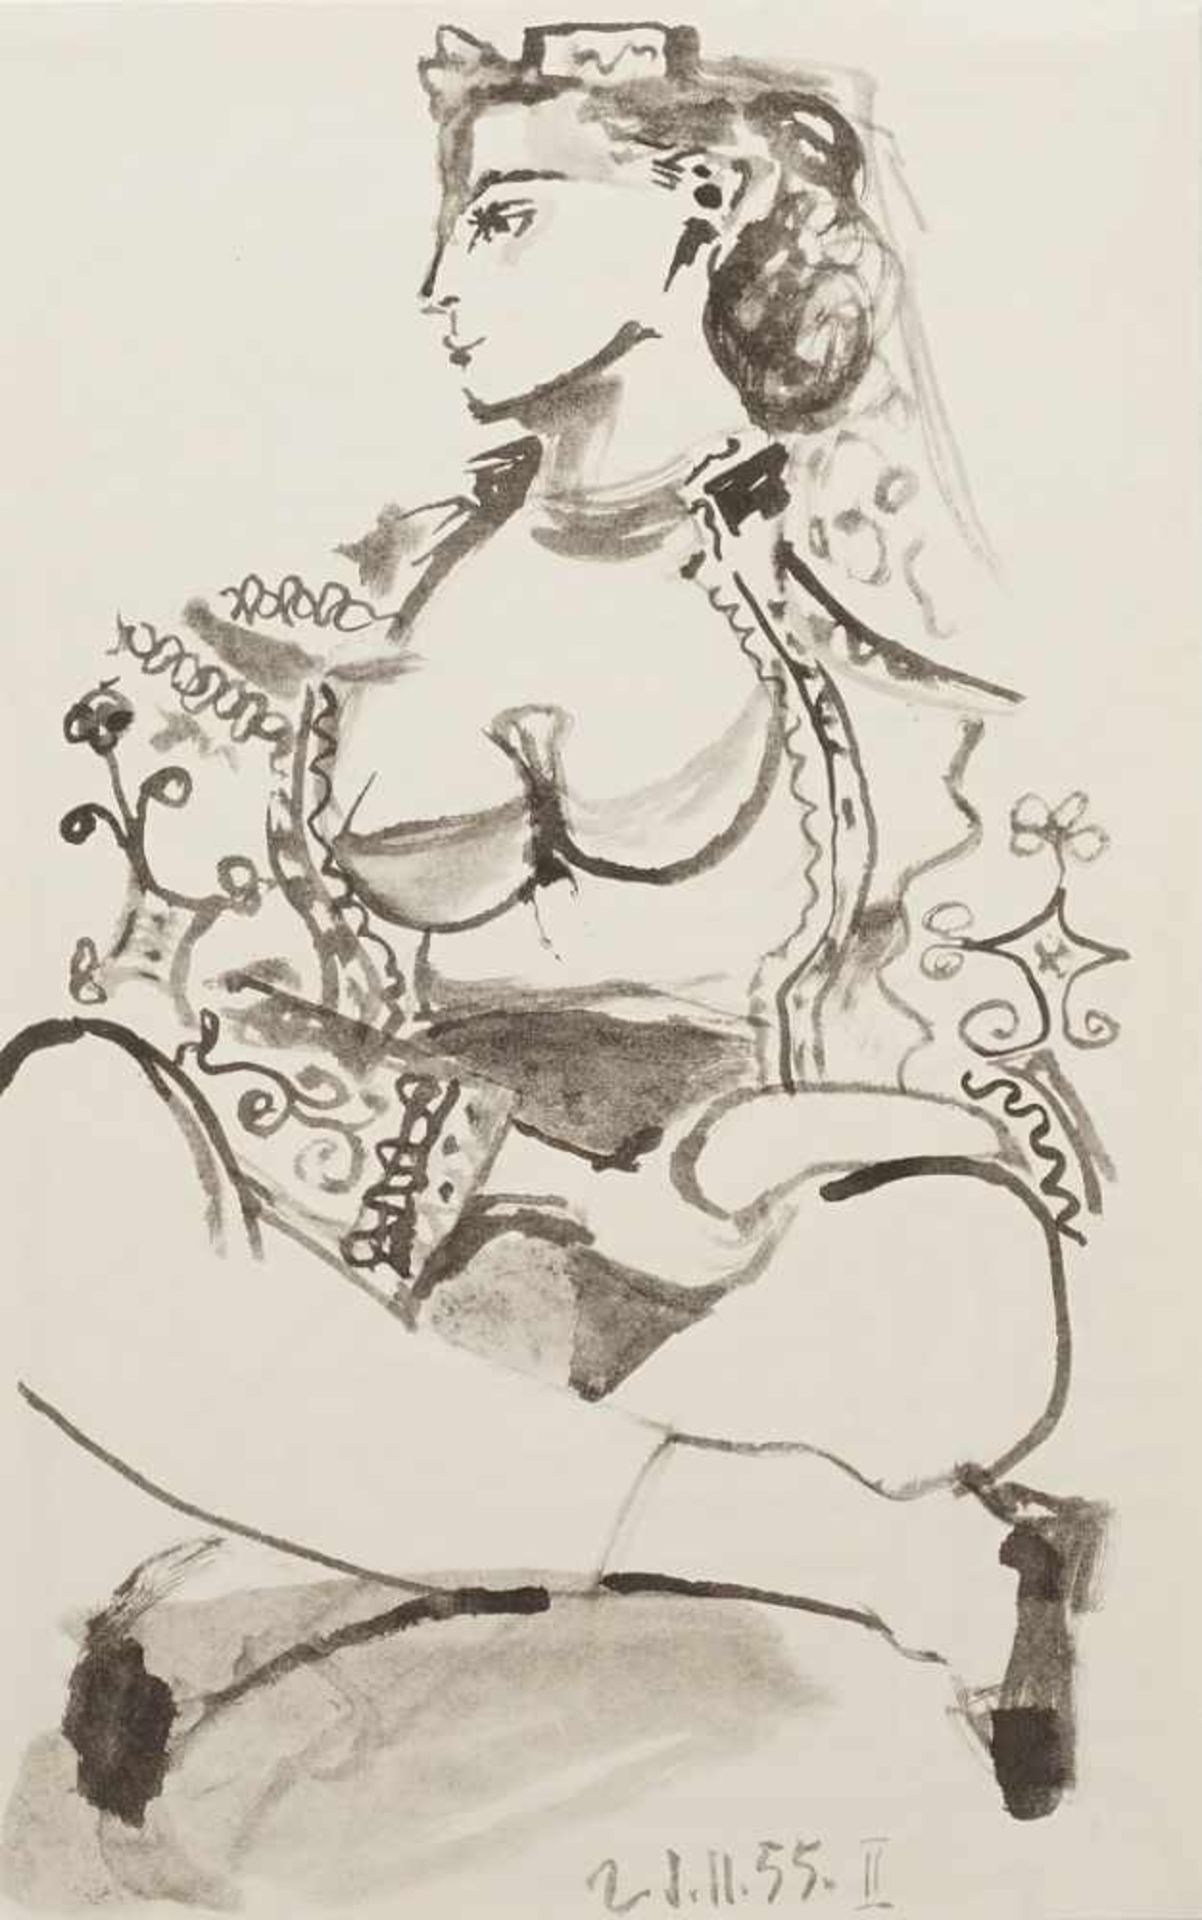 Pablo Picasso, "Femme accroupie (Kauernde Frau), 21.11.55 II"